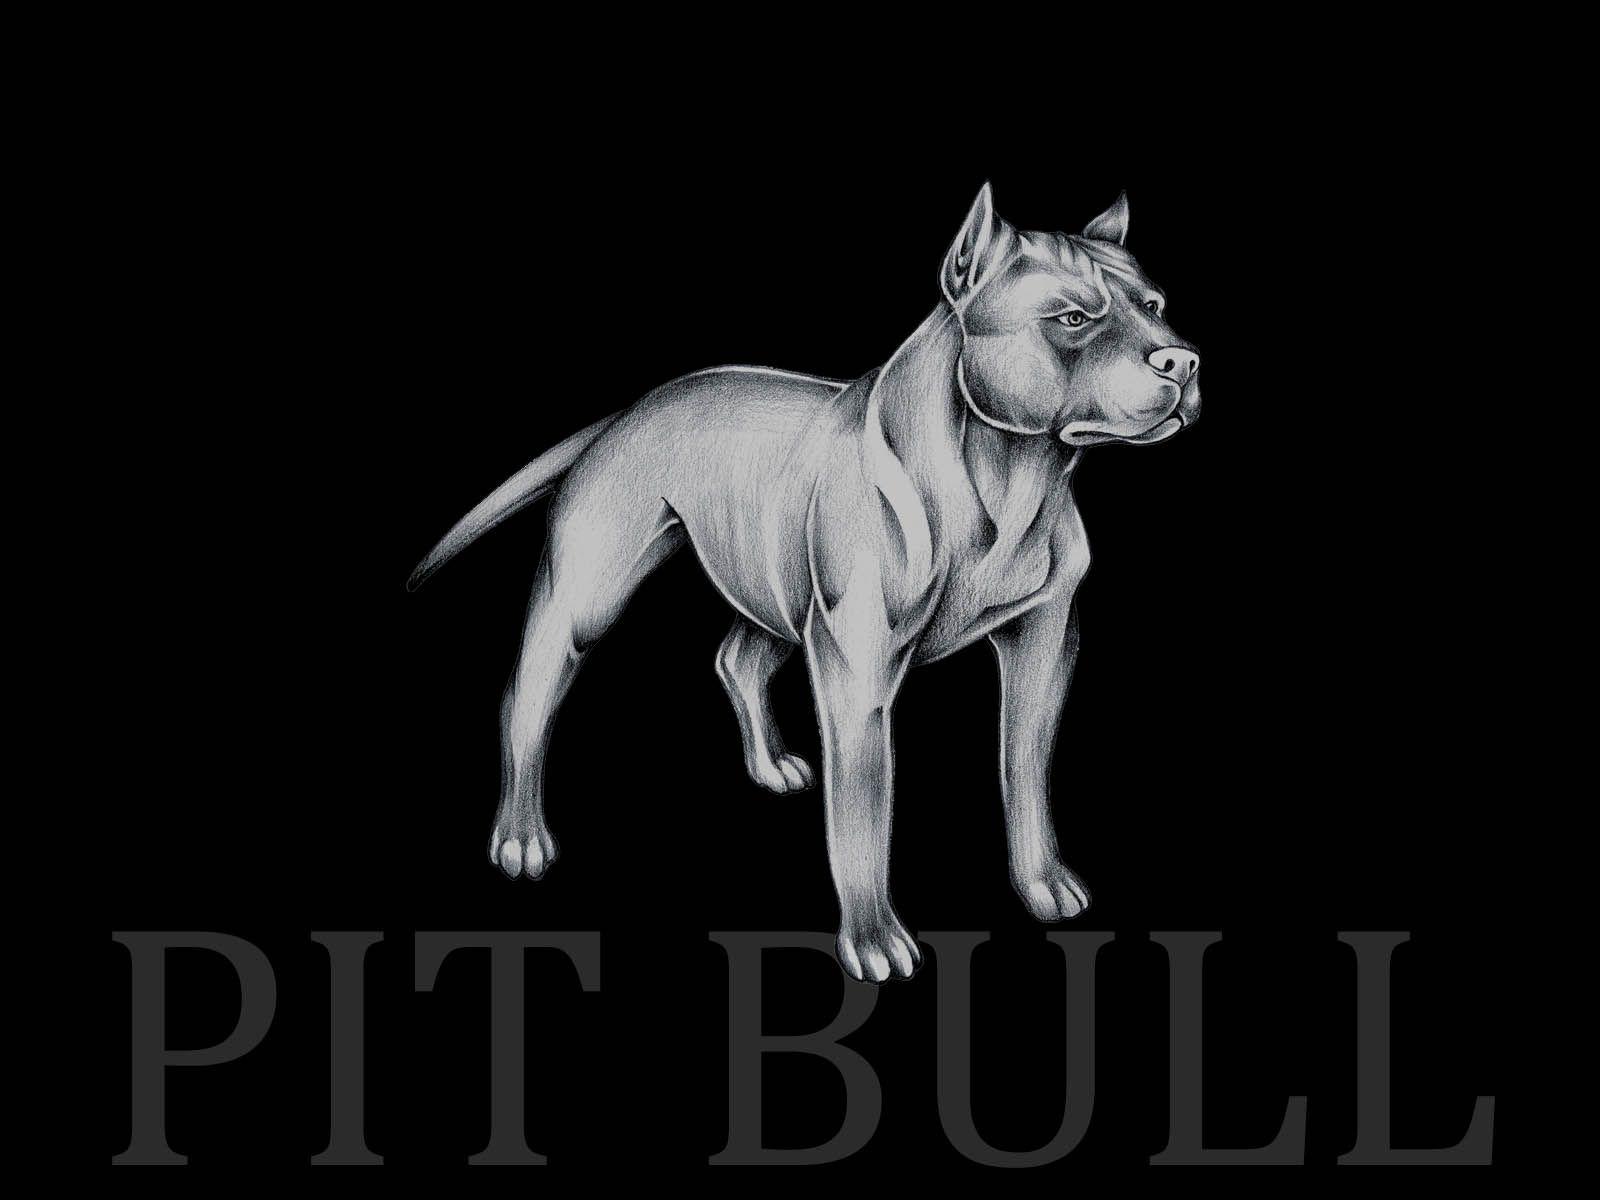 pitbull logo wallpaper